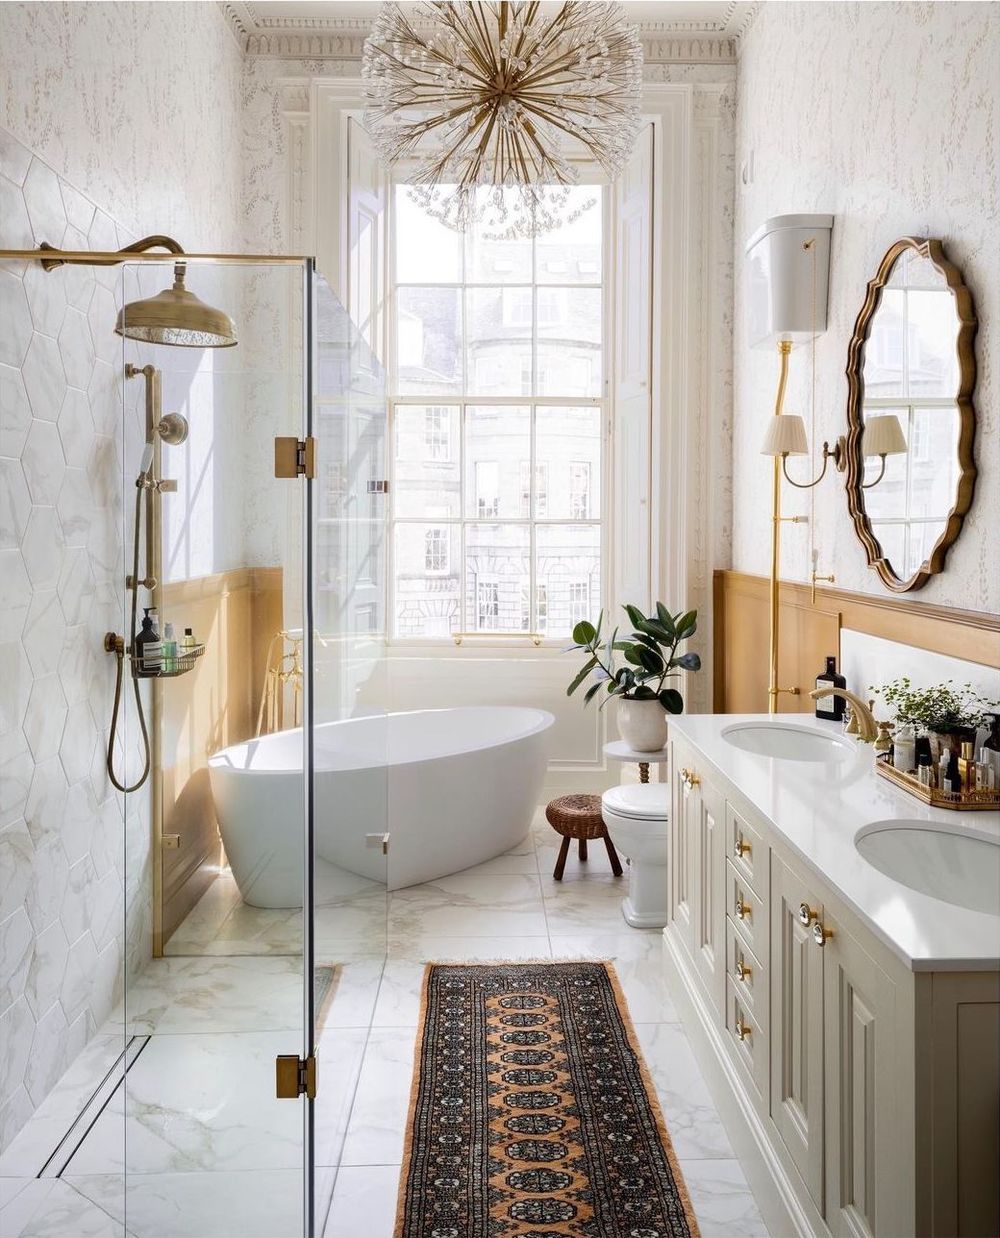 https://curatedinterior.com/wp-content/uploads/2021/05/Bathroom-Essentials-via-@interiors.by_.lisa_.guest_.jpg